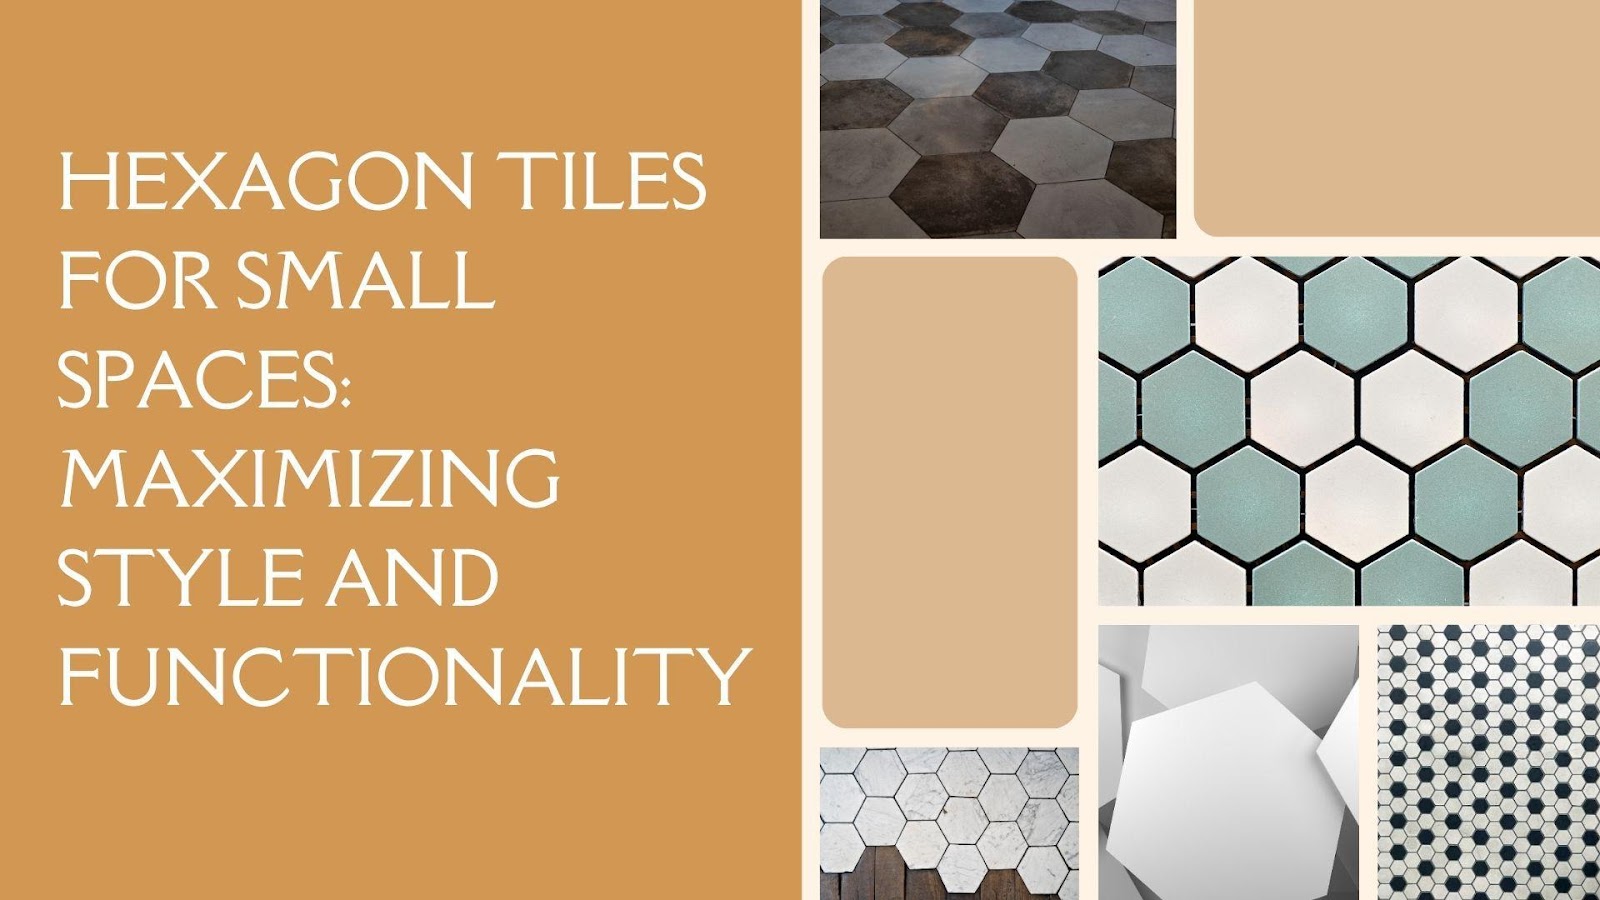 Hexagon Tiles for Small Spaces